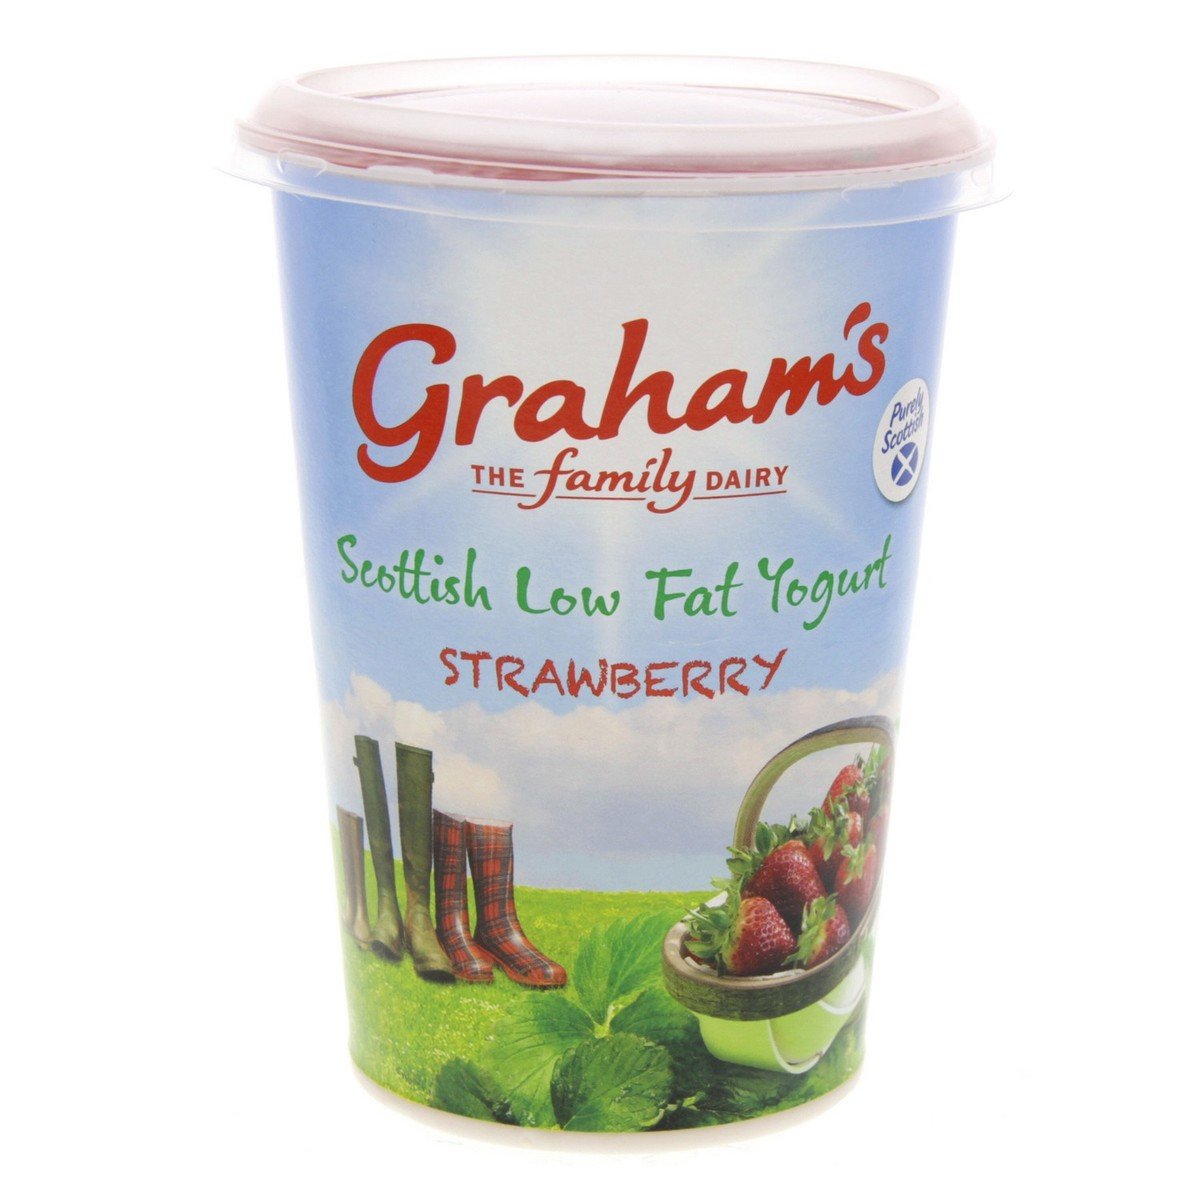 Graham's Scottish Low Fat Yoghurt Strawberry 450g